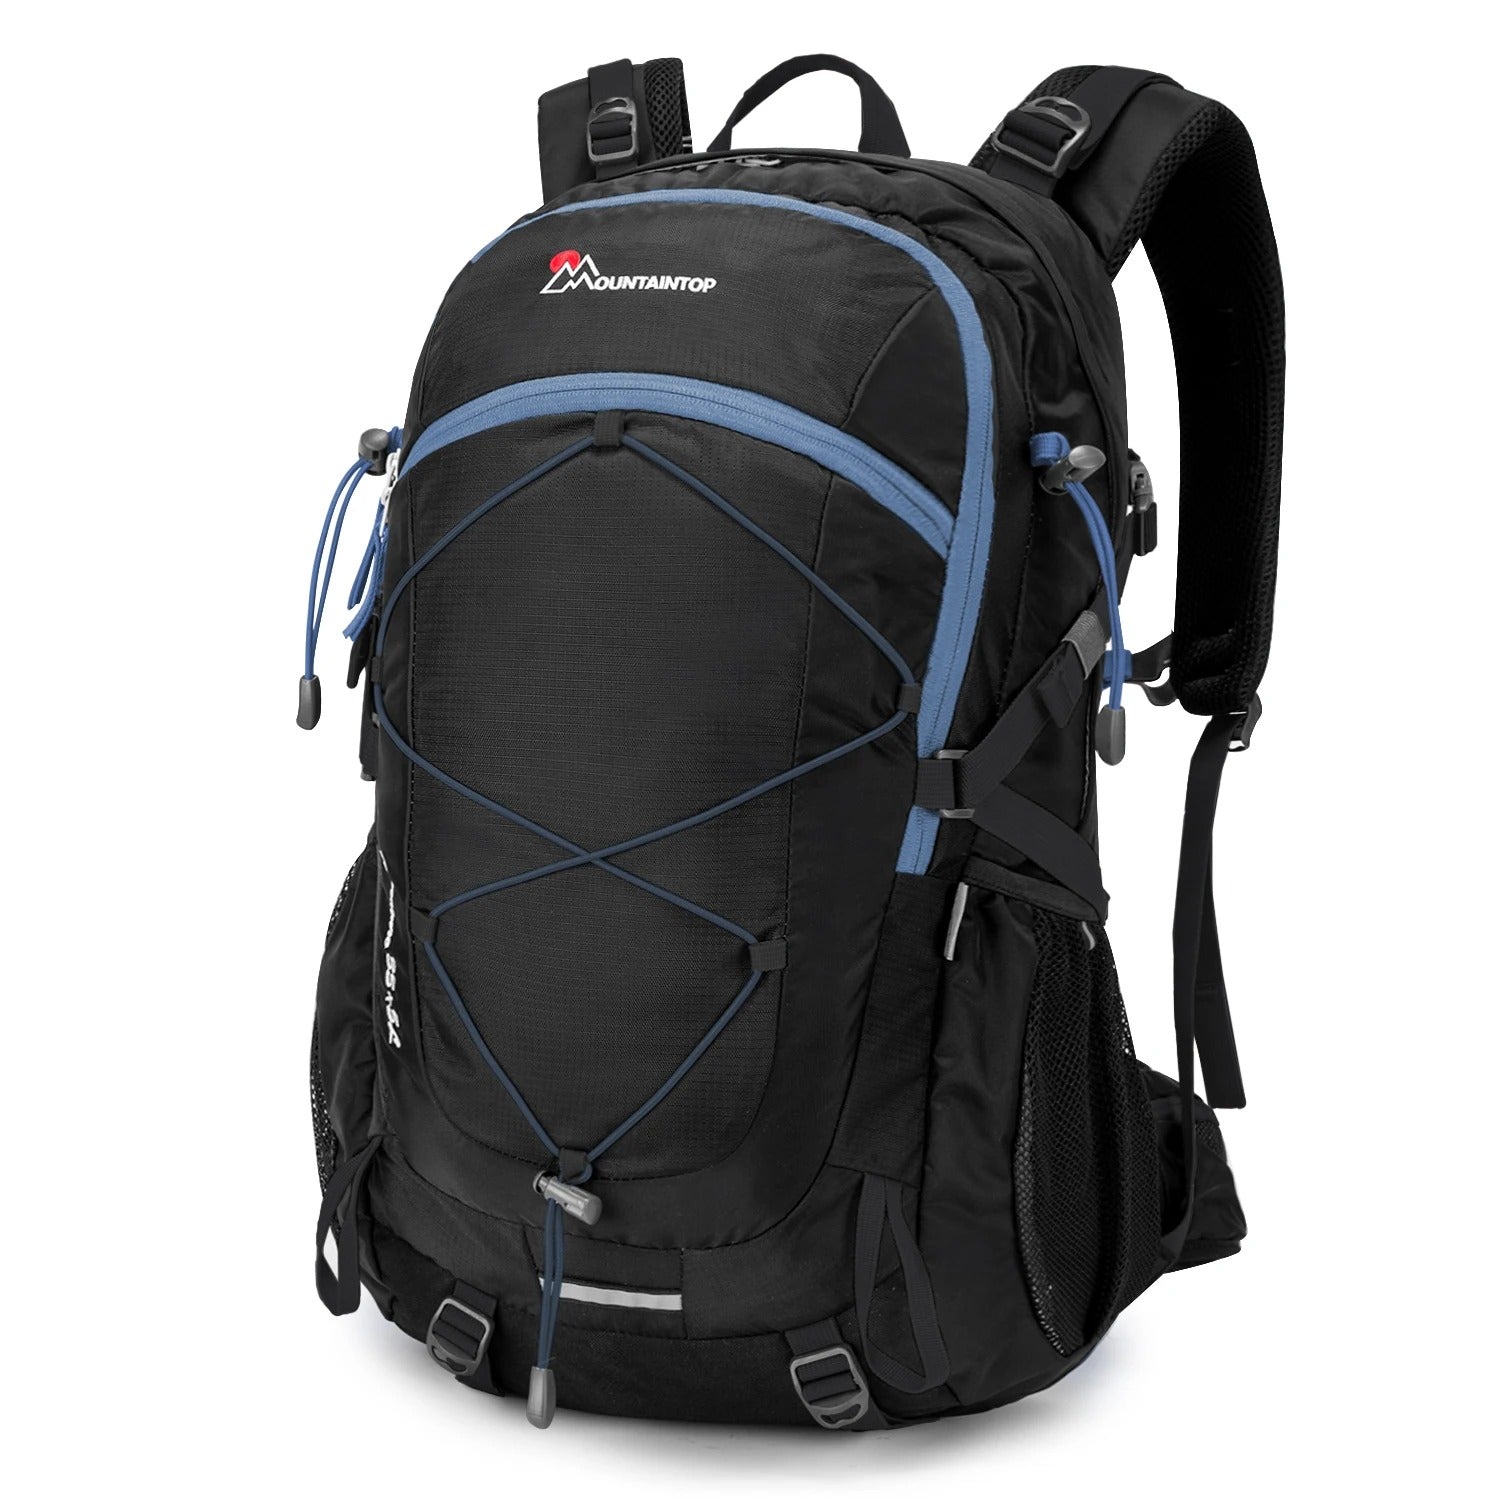 Mens Ski Backpack - Black and Blue